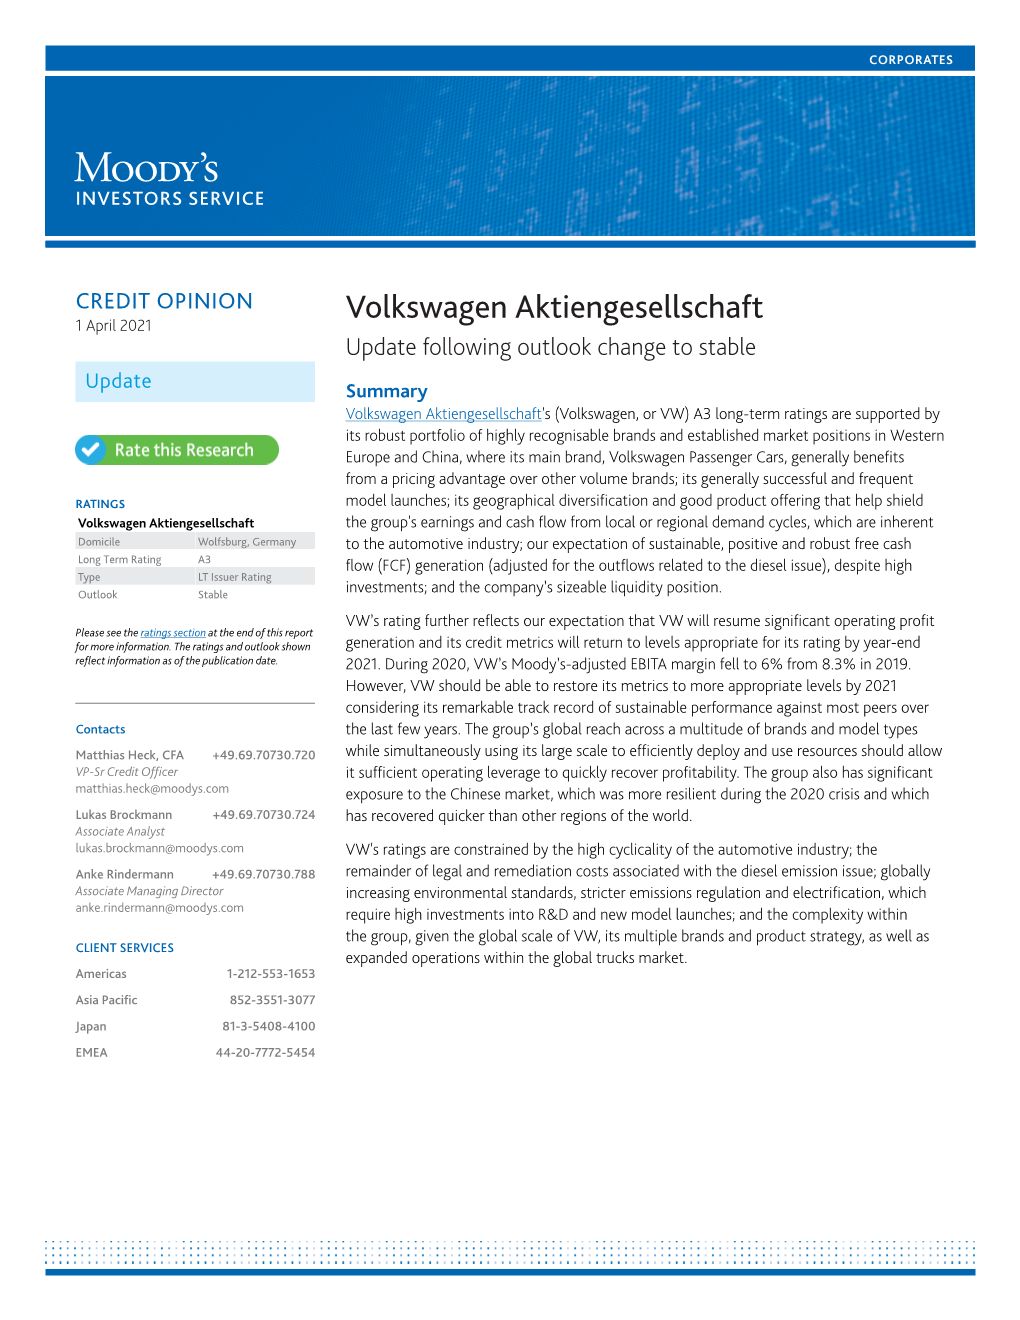 Volkswagen Aktiengesellschaft 1 April 2021 Update Following Outlook Change to Stable